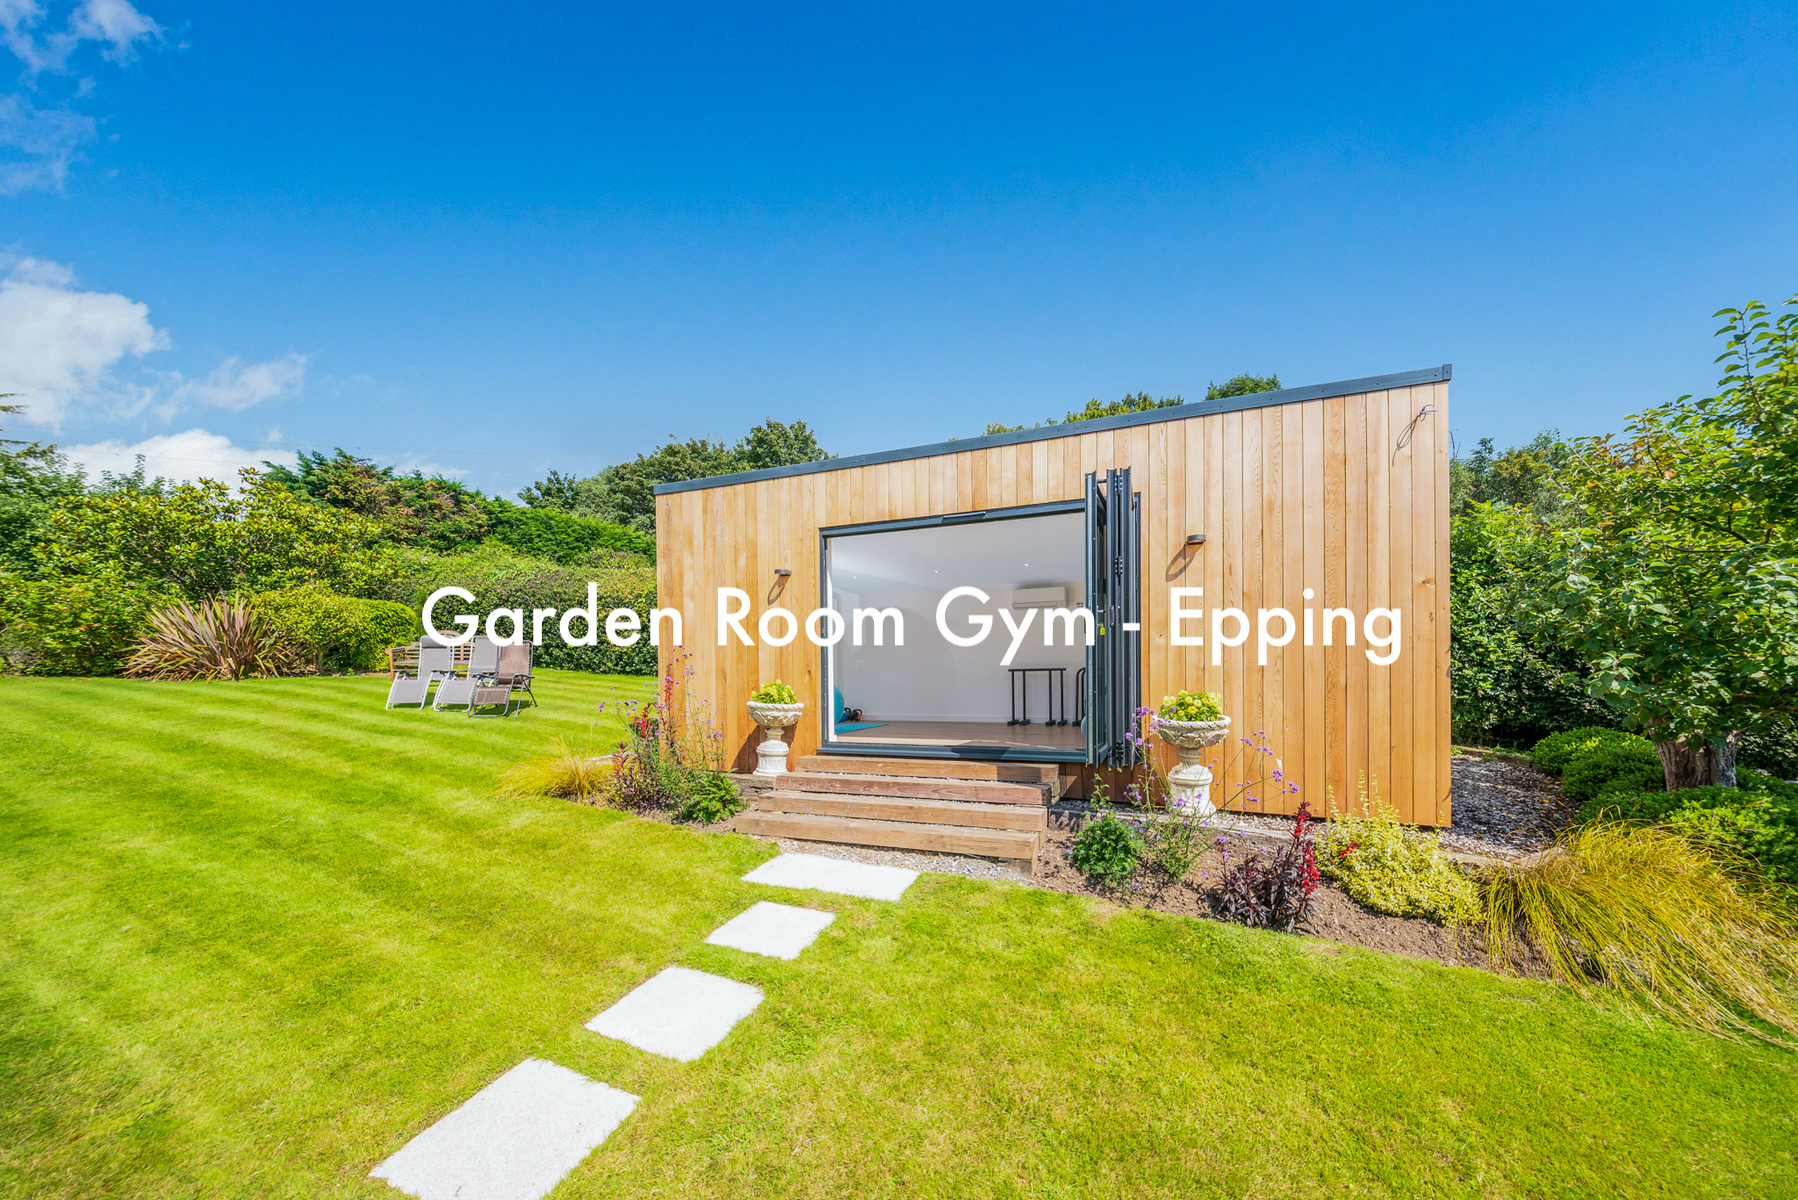 Classic Range Garden Room Gym Epping